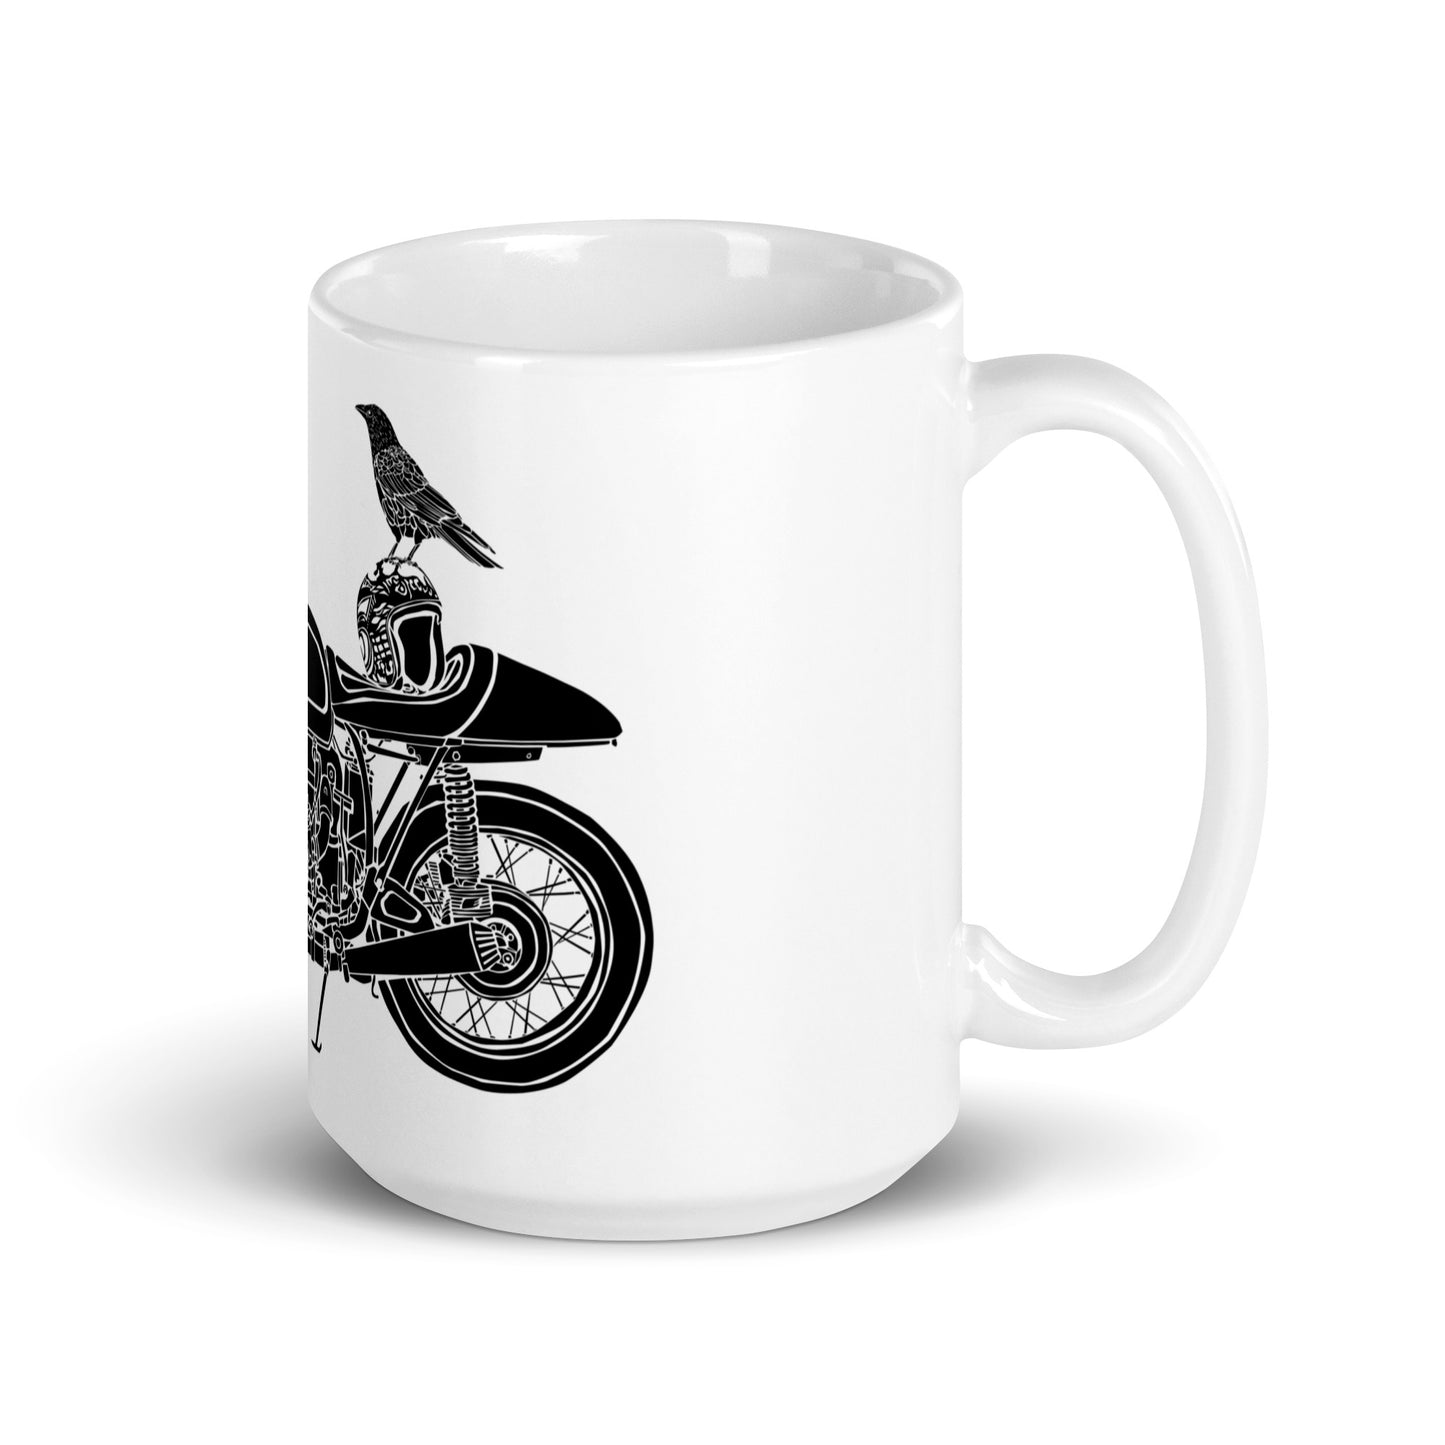 BellavanceInk: Coffee Mug With A Crow Sitting On Top Of A Vintage Cafe Racer Motorcycle Pen & Ink Sketch